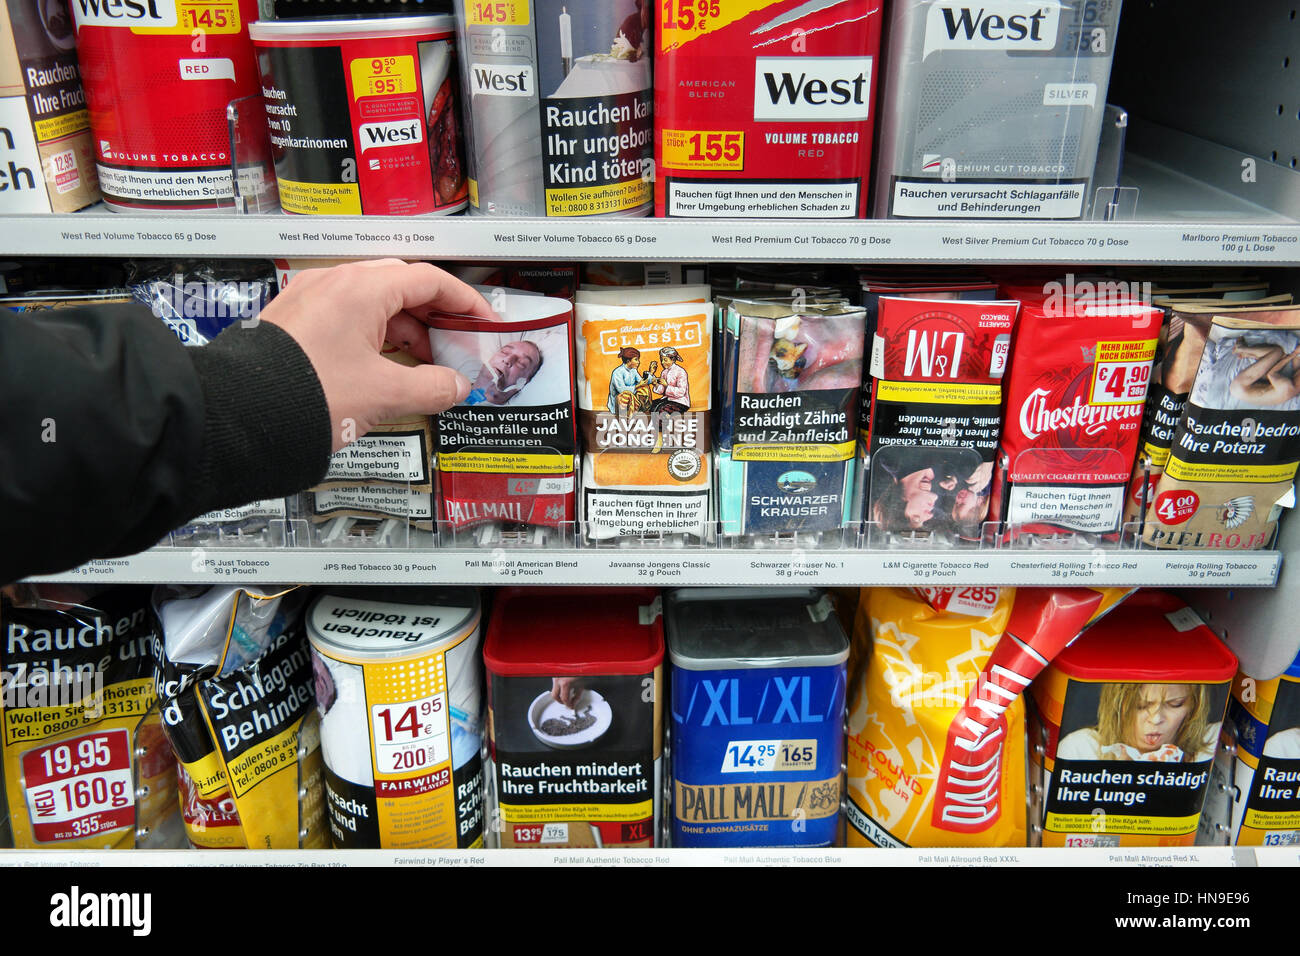 Alemania - Diciembre 2016: estantes con envases de tabaco para rollies Kaufland en un hipermercado. Foto de stock